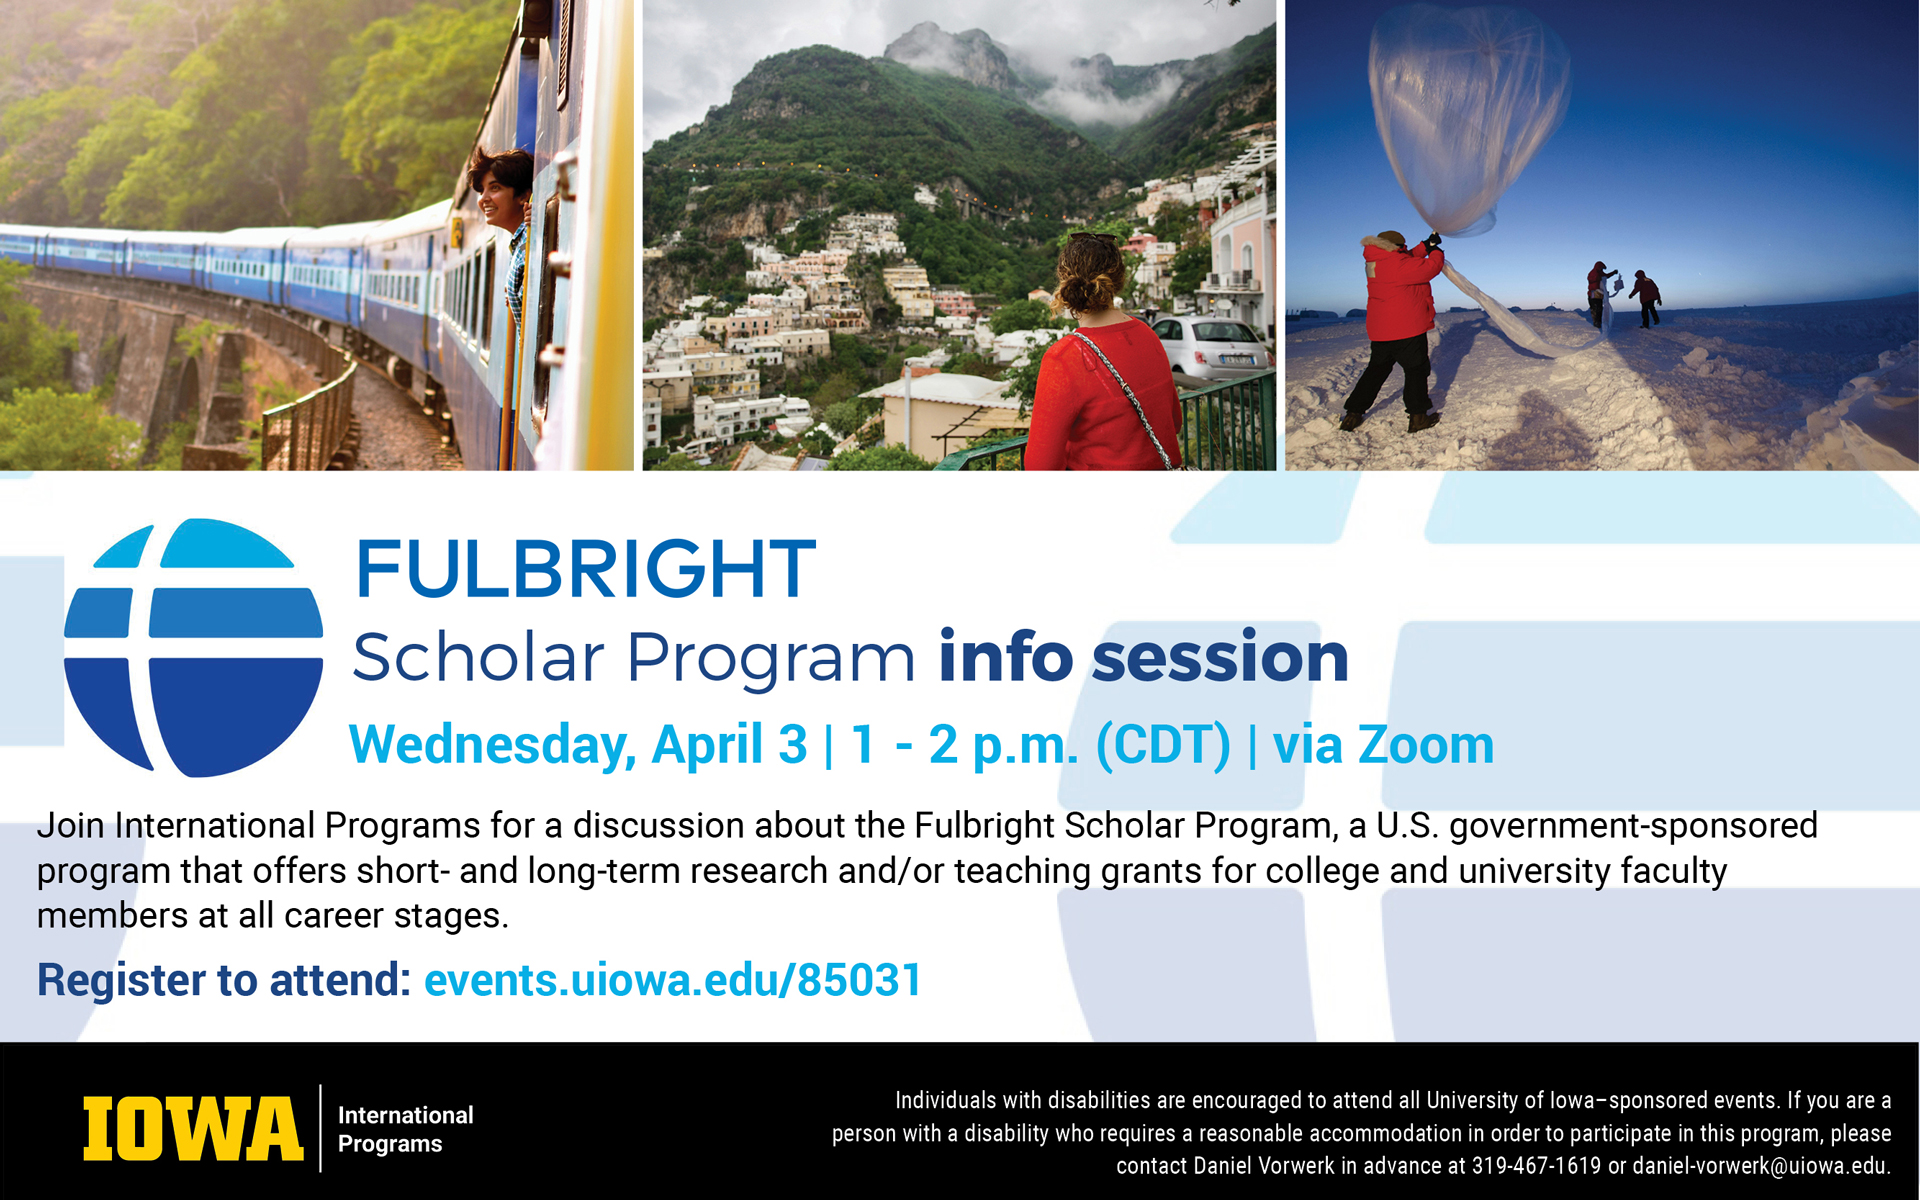 Fulbright Scholar Program Info Session: Wednesday April 3, 1-2 p.m. via Zoom. Register to attend: events.uiowa.edu/85031